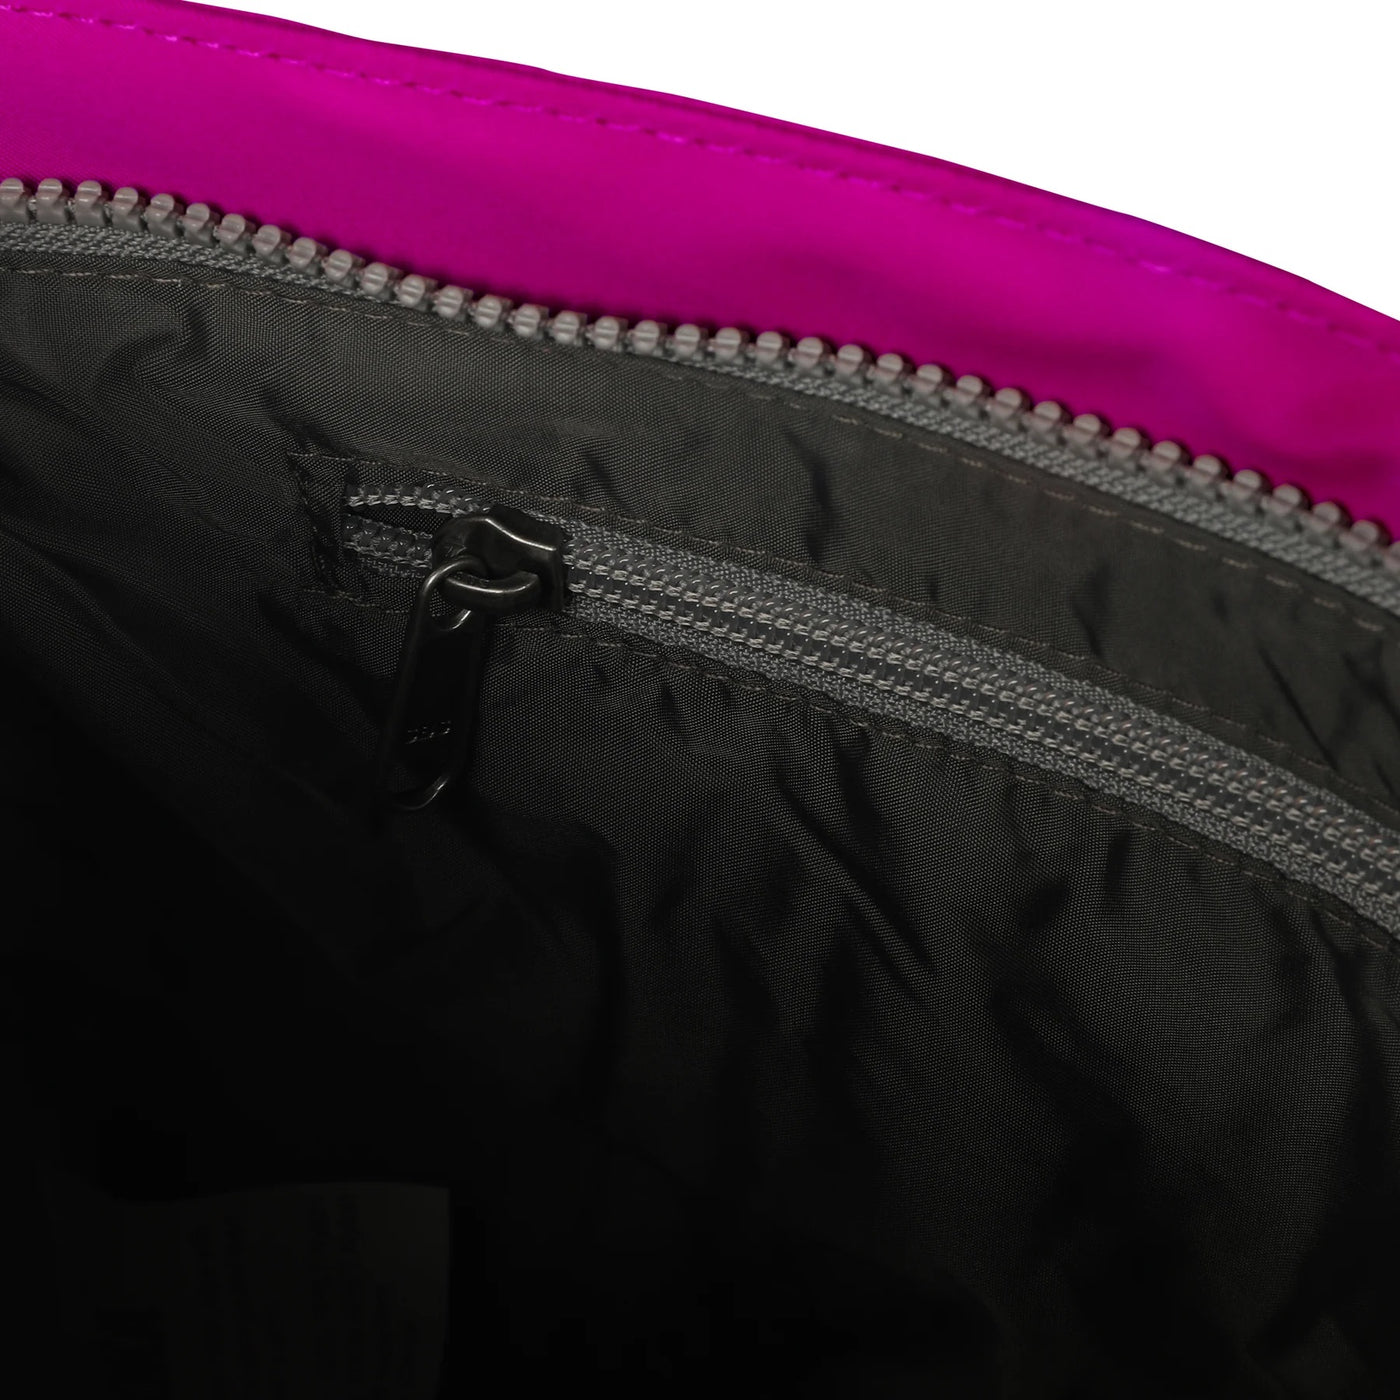 Roka Kennington B Medium Crossbody Bag -Sustainable Nylon - Candy Pink